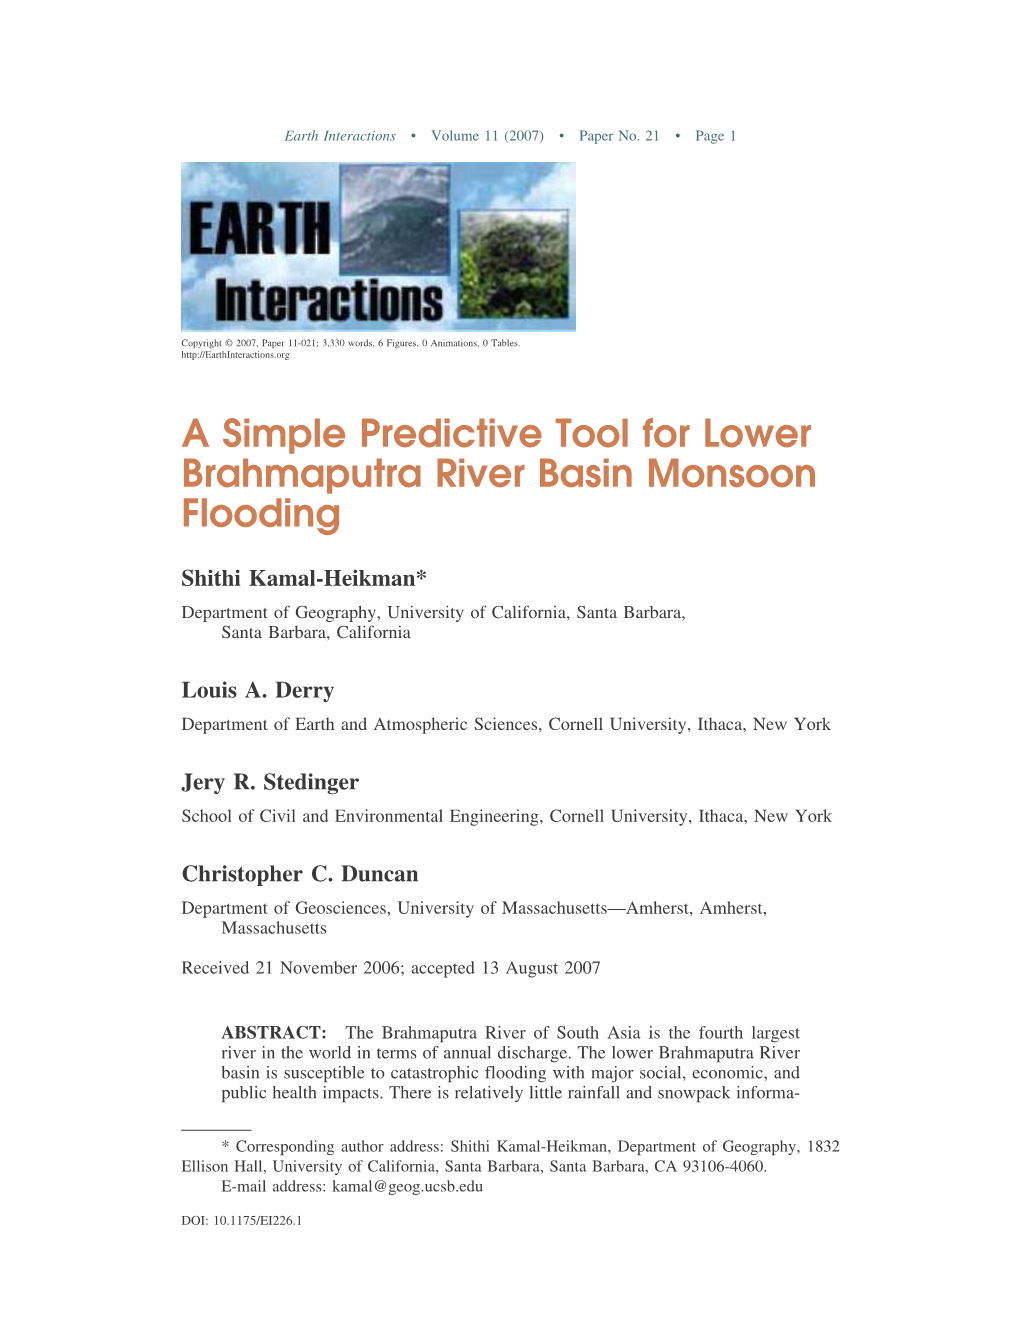 A Simple Predictive Tool for Lower Brahmaputra River Basin Monsoon Flooding